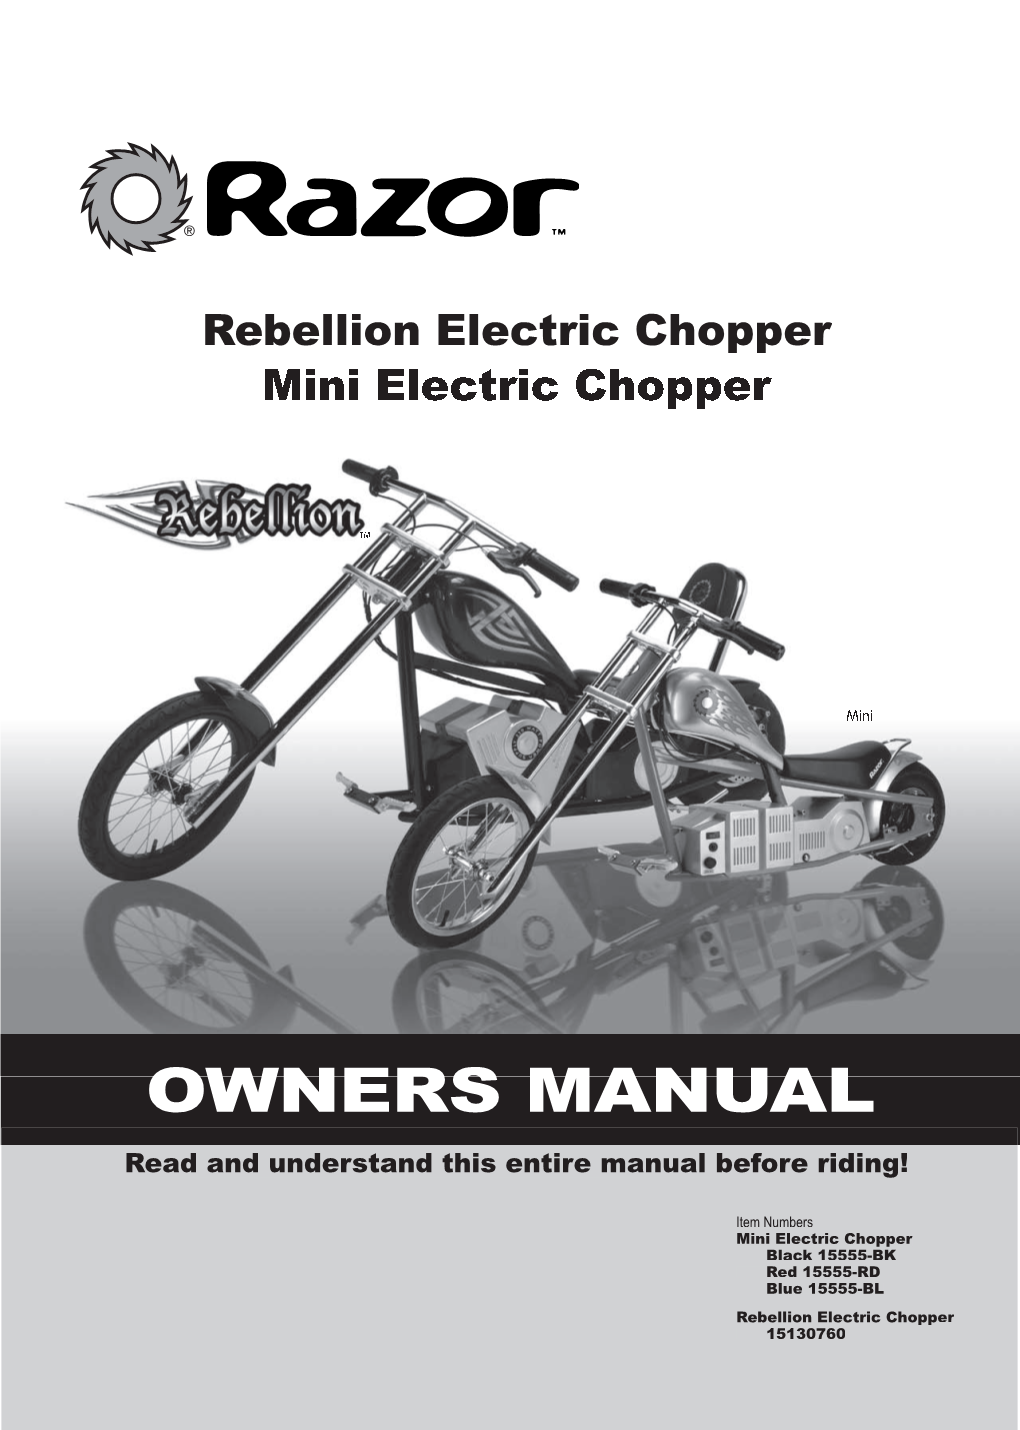 Razor Rebellion Owners Manual